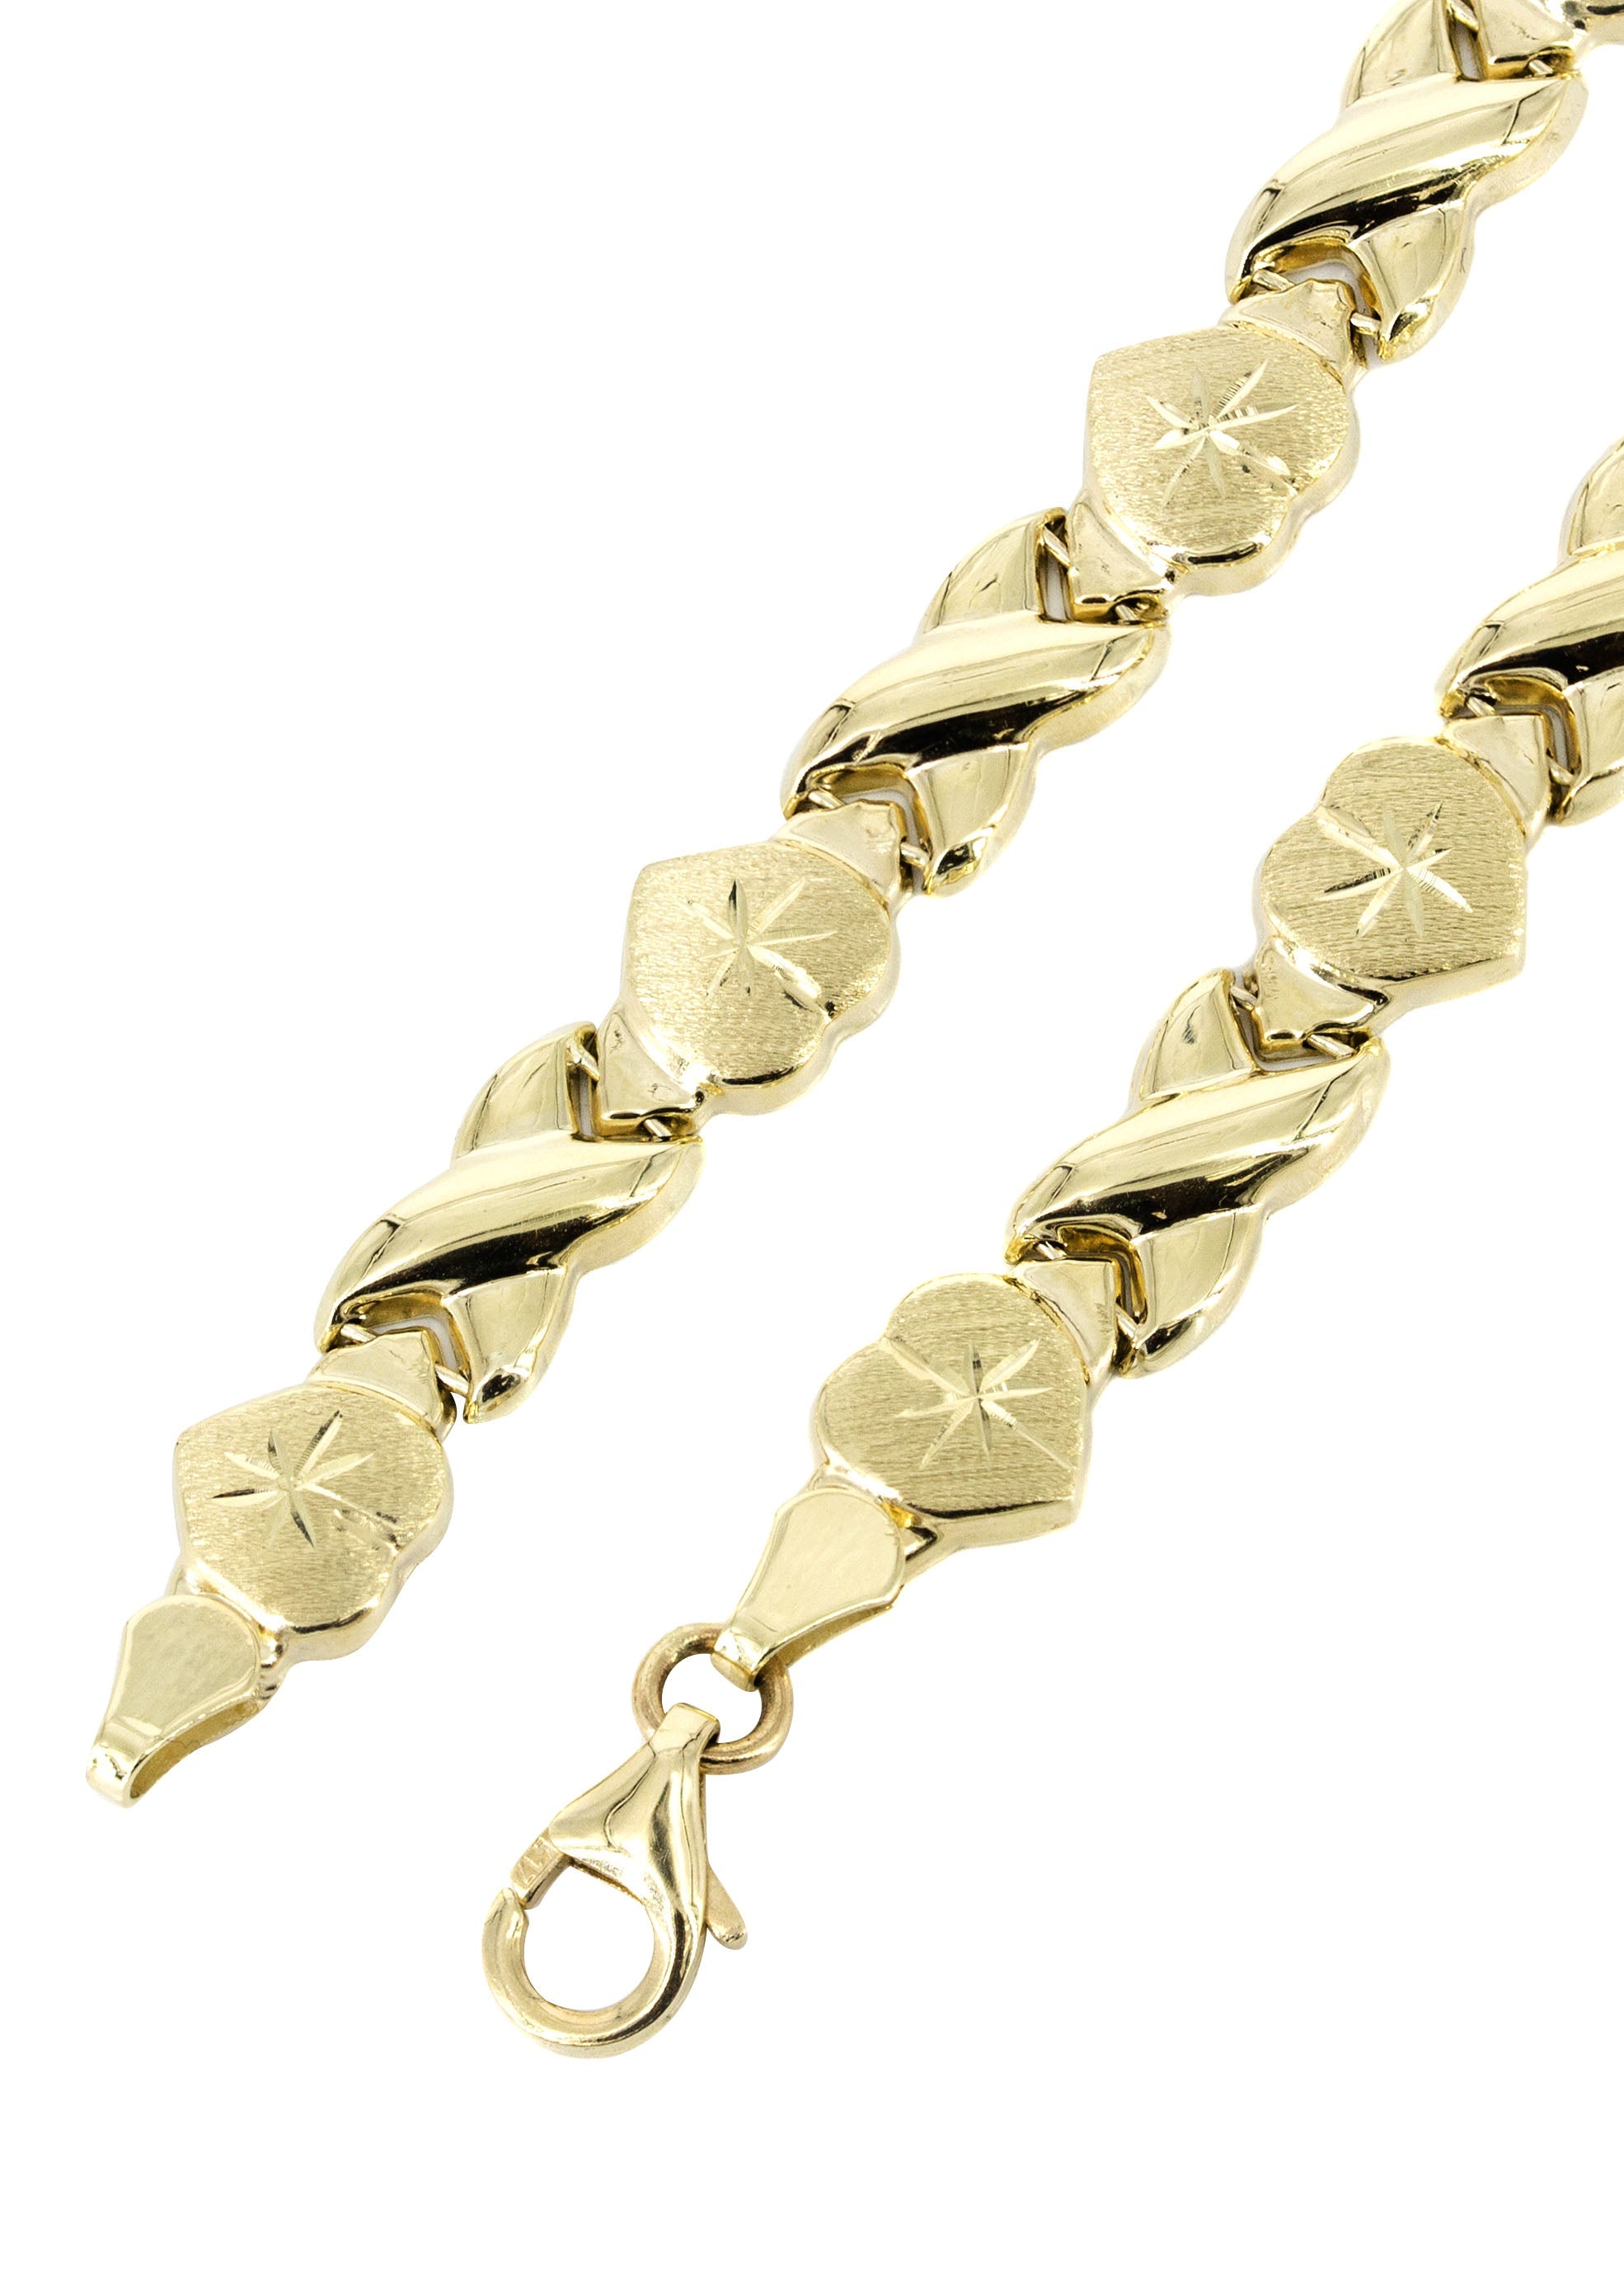 A diamond xo necklace in 14k white gold.